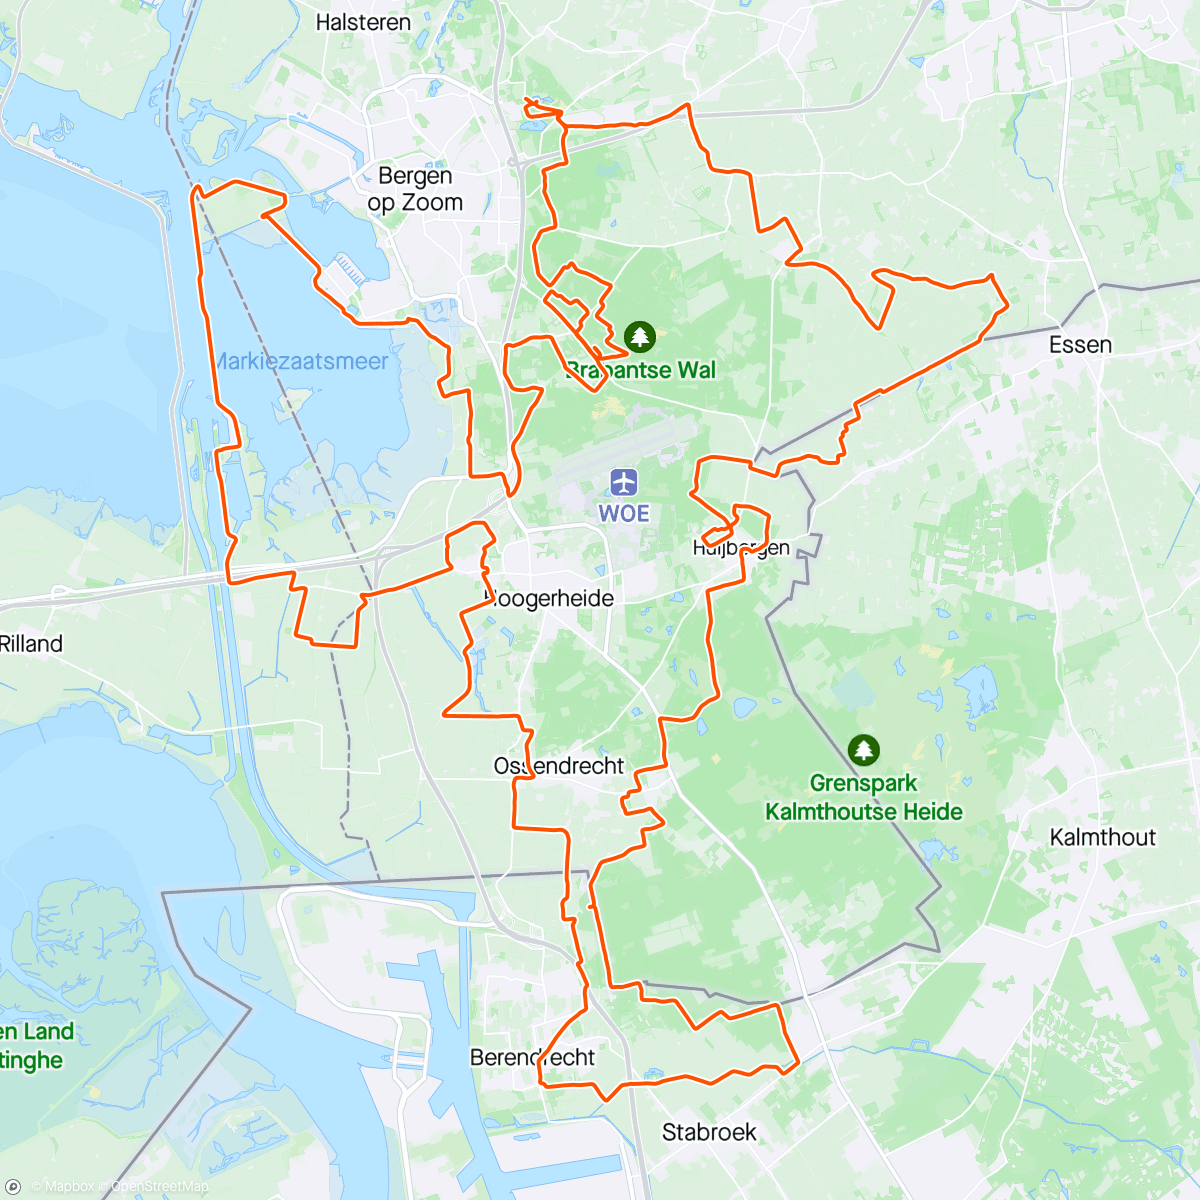 Map of the activity, Grenspalenklassieker Brabantse wal